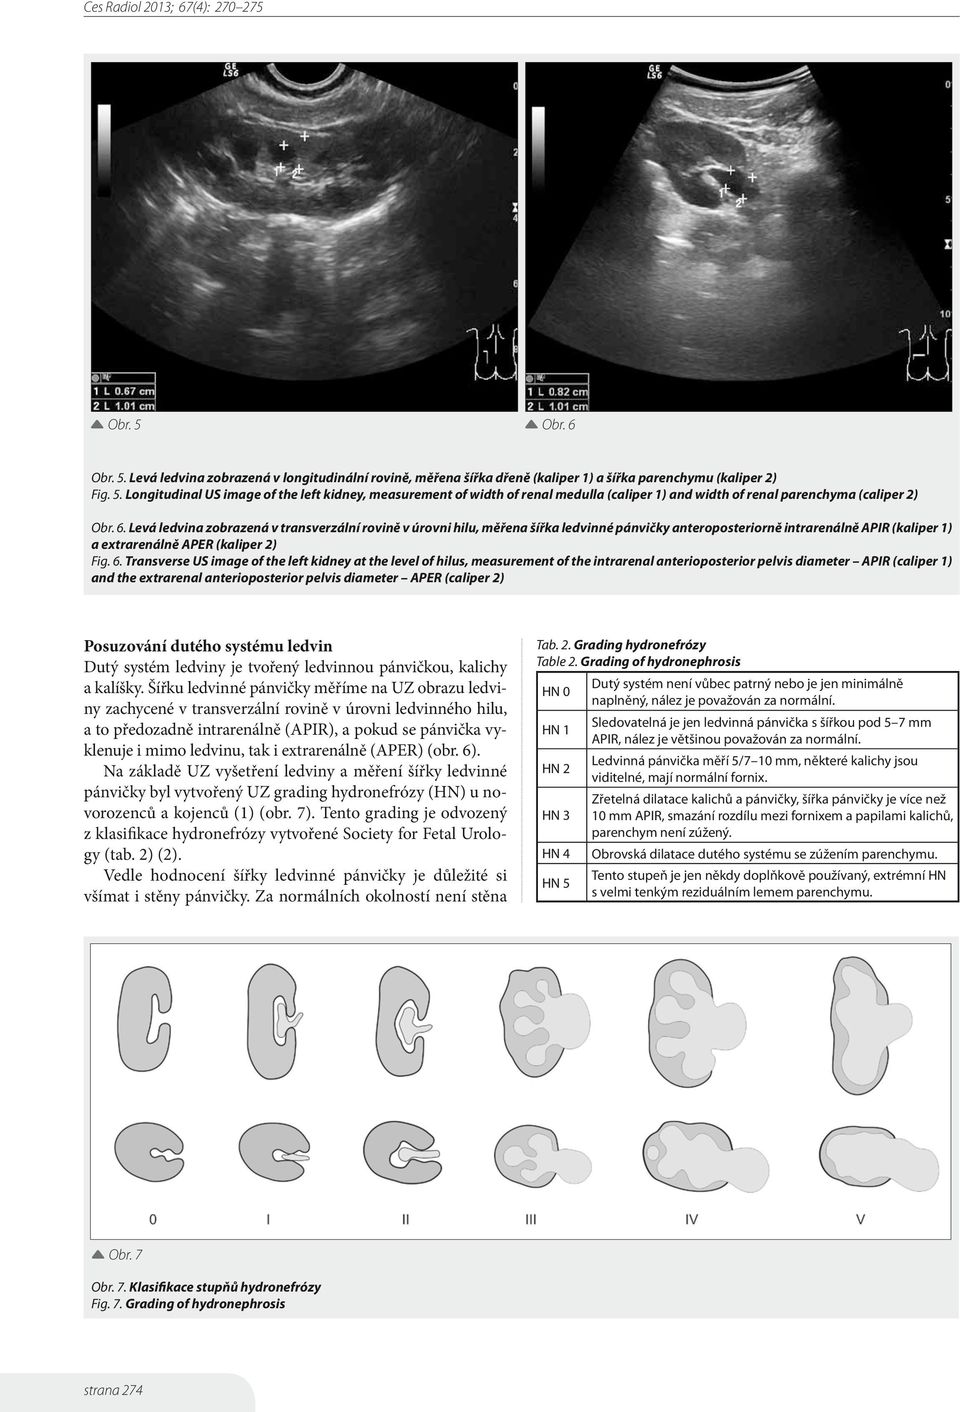 Transverse US image of the left kidney at the level of hilus, measurement of the intrarenal anterioposterior pelvis diameter APIR (caliper 1) and the extrarenal anterioposterior pelvis diameter APER